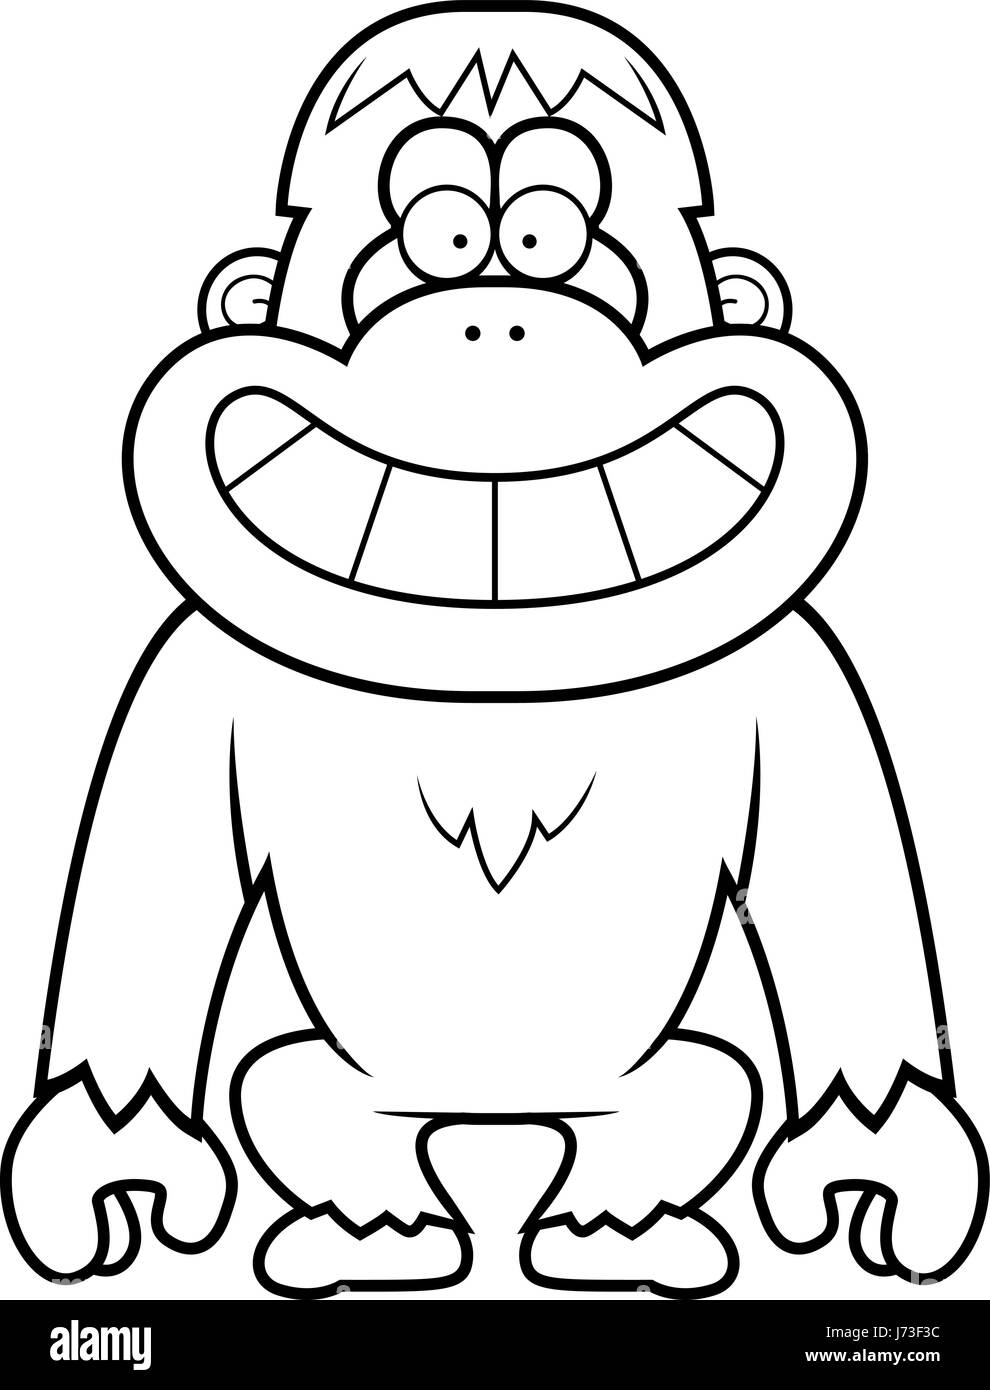 Ein Cartoon Illustration ein Orang-Utan grinsend. Stock Vektor